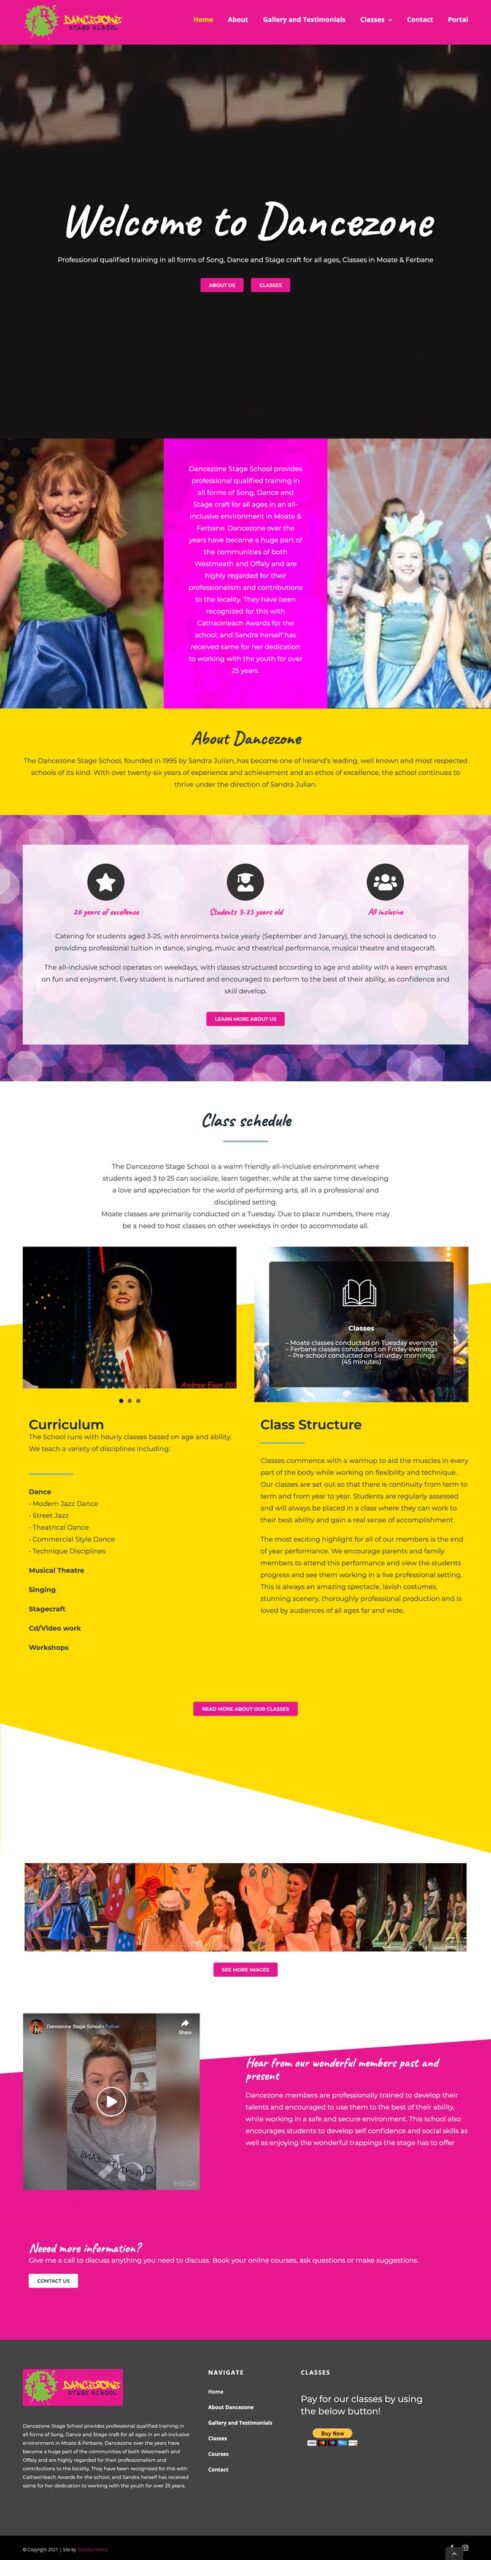 dance school dublin website design